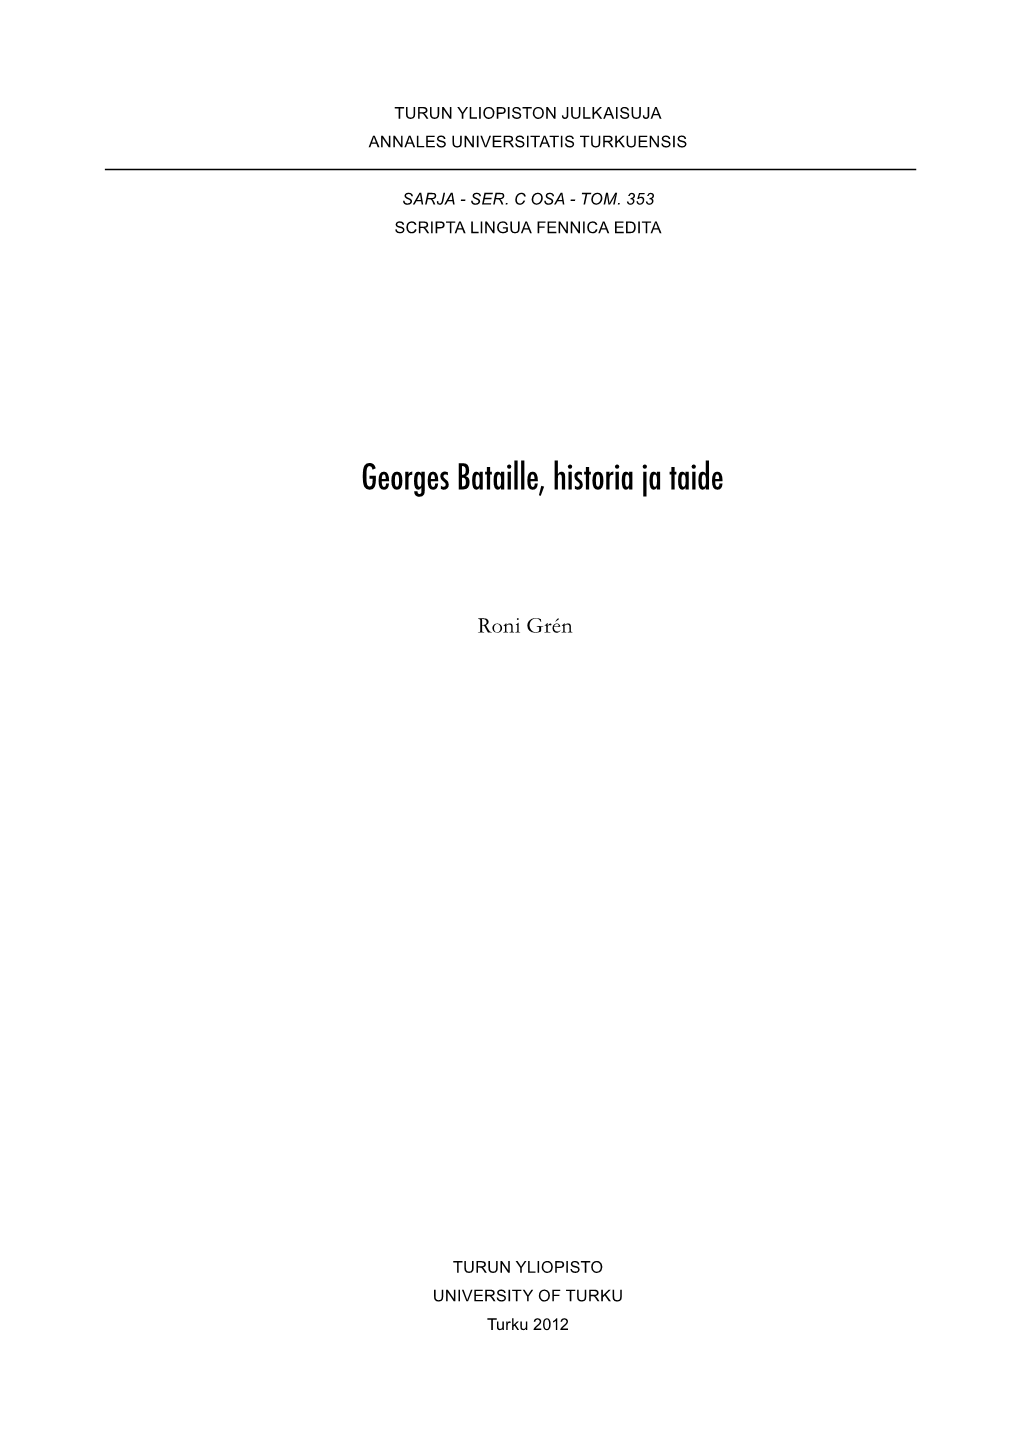 Georges Bataille, Historia Ja Taide